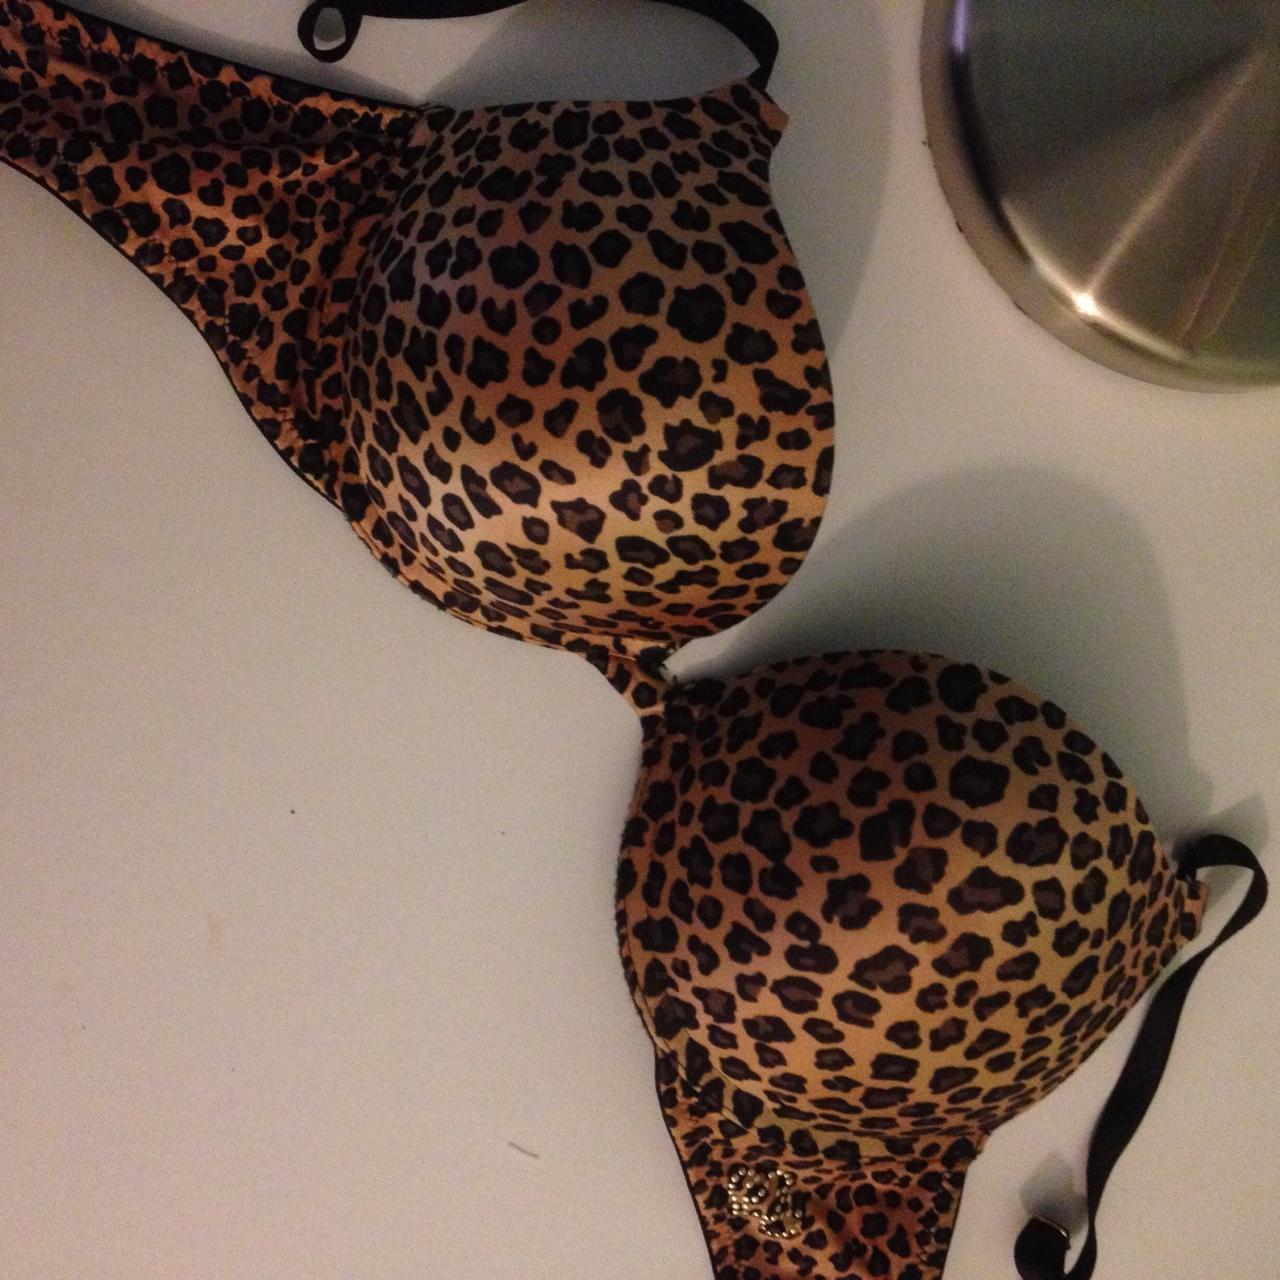 Pair of Secret Possessions bras. Size 34B - Like - Depop